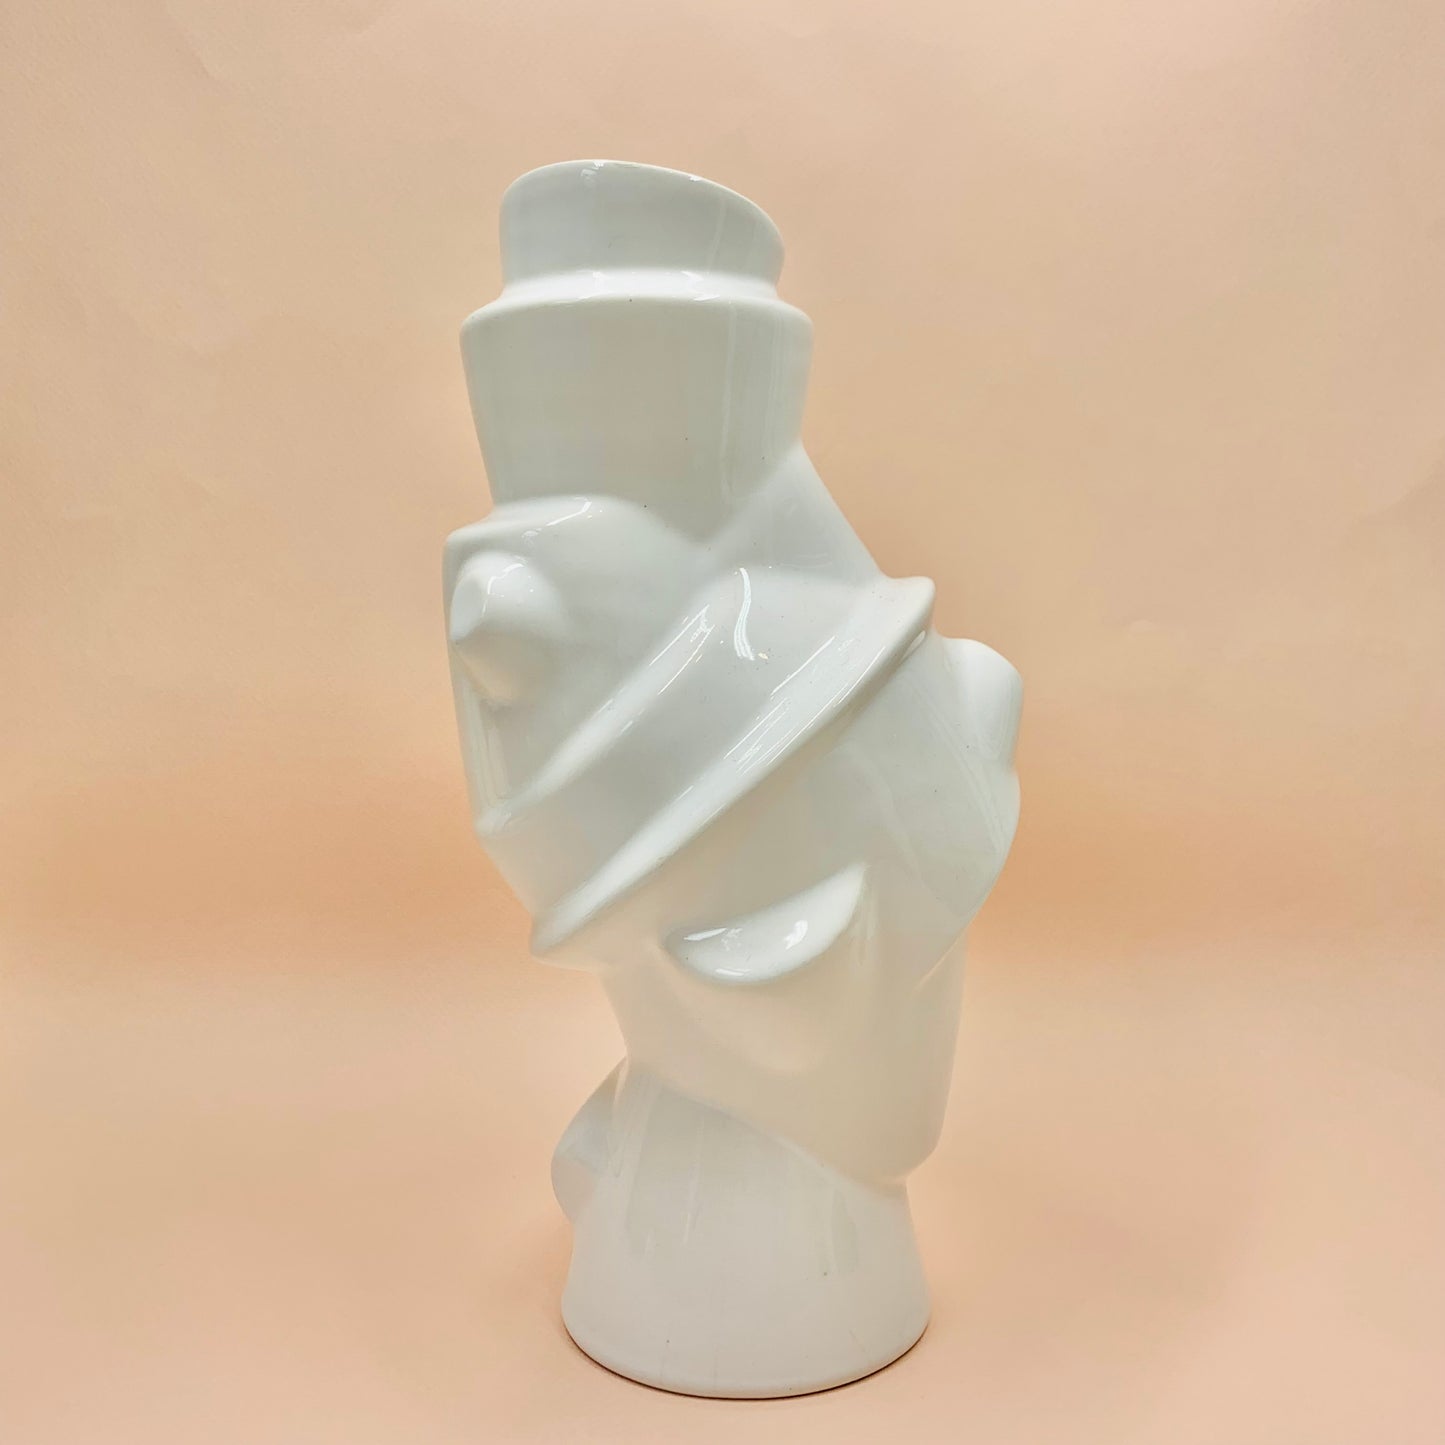 Extremely rare 1980s Danish Muuto white porcelain vase by Muuto